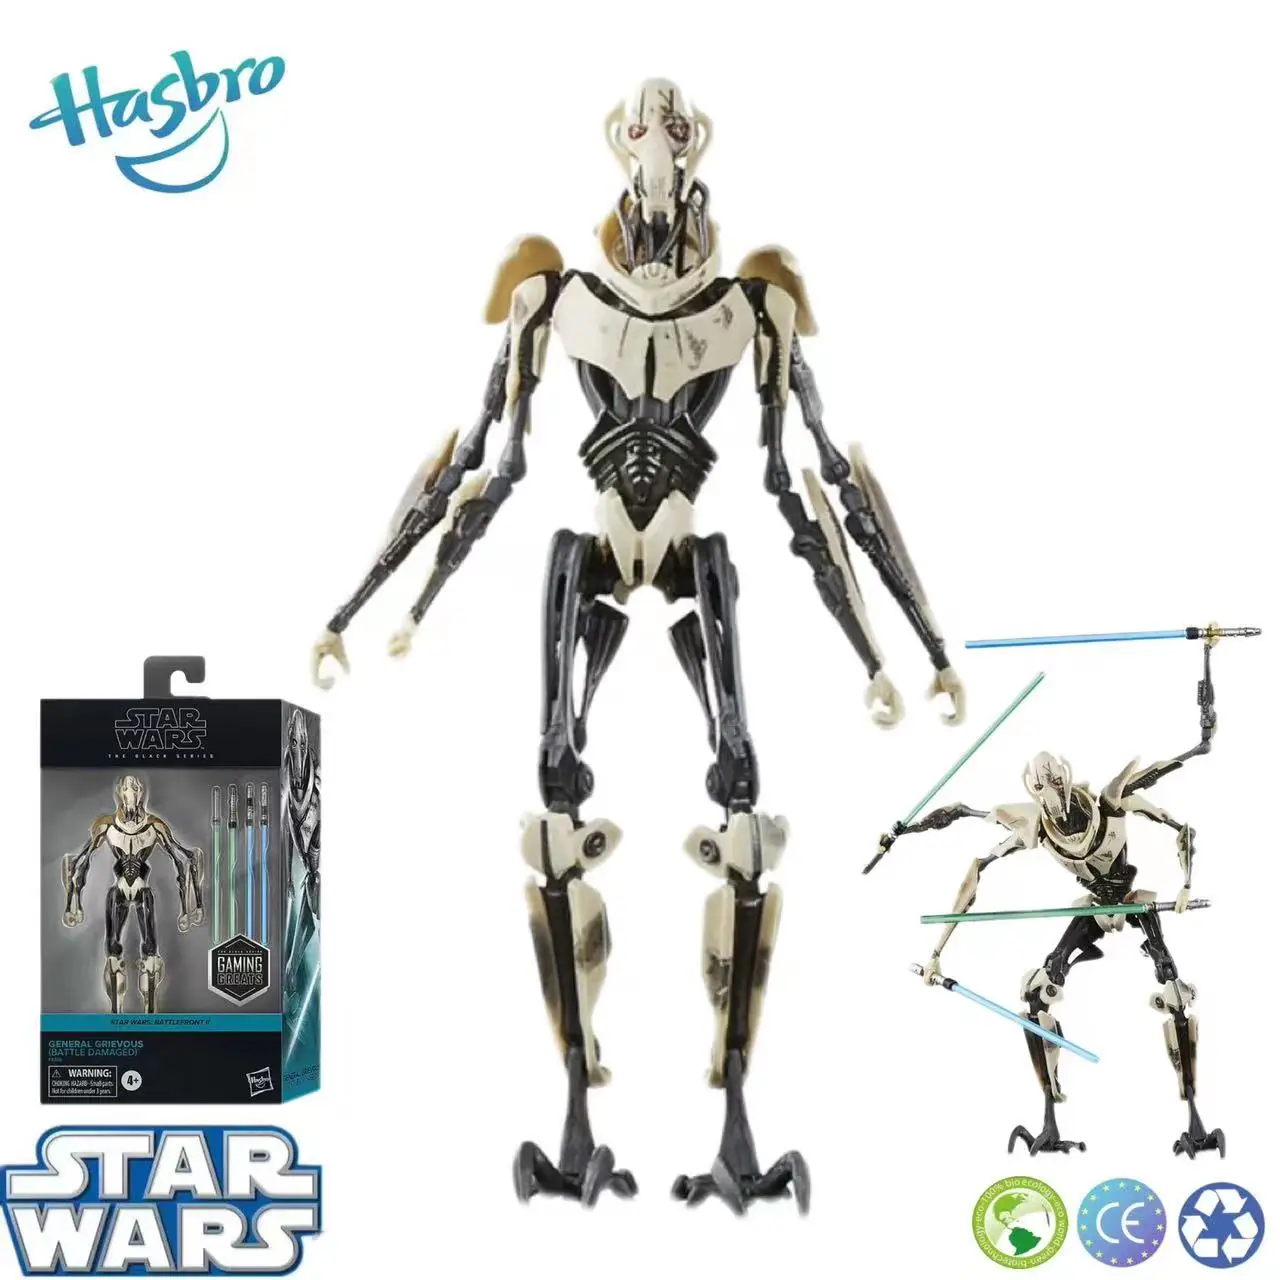 Hasbro Star Wars Black Series Battlefront Ⅱ Gaming Greats General Grievous Battle Damaged Action Figure Model Toy 6"